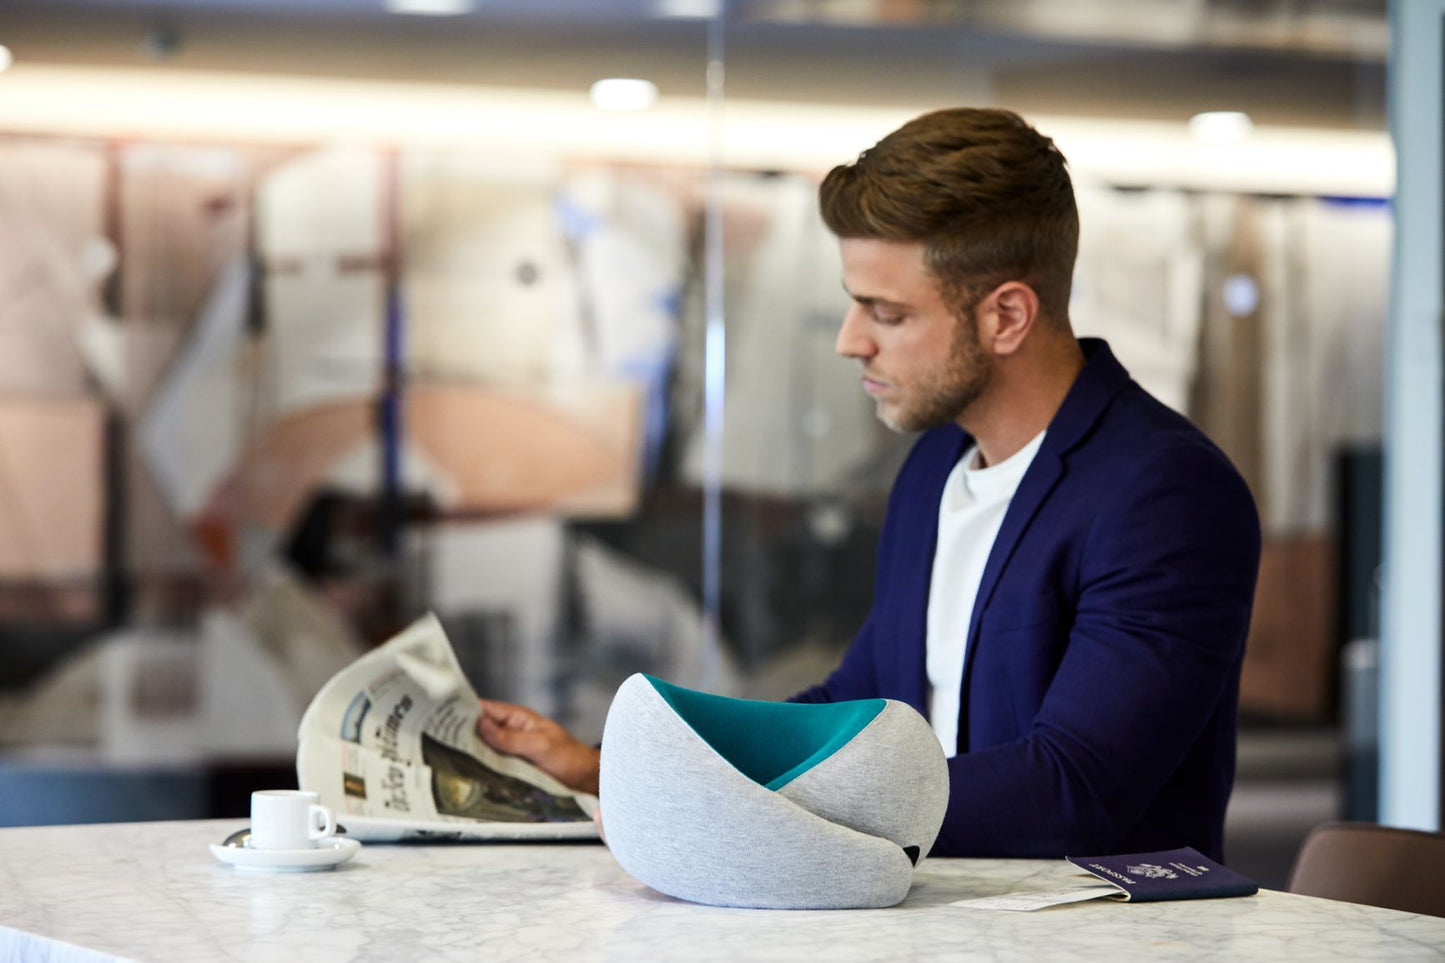 Man Reading News Paper Next To Neck Pillow.